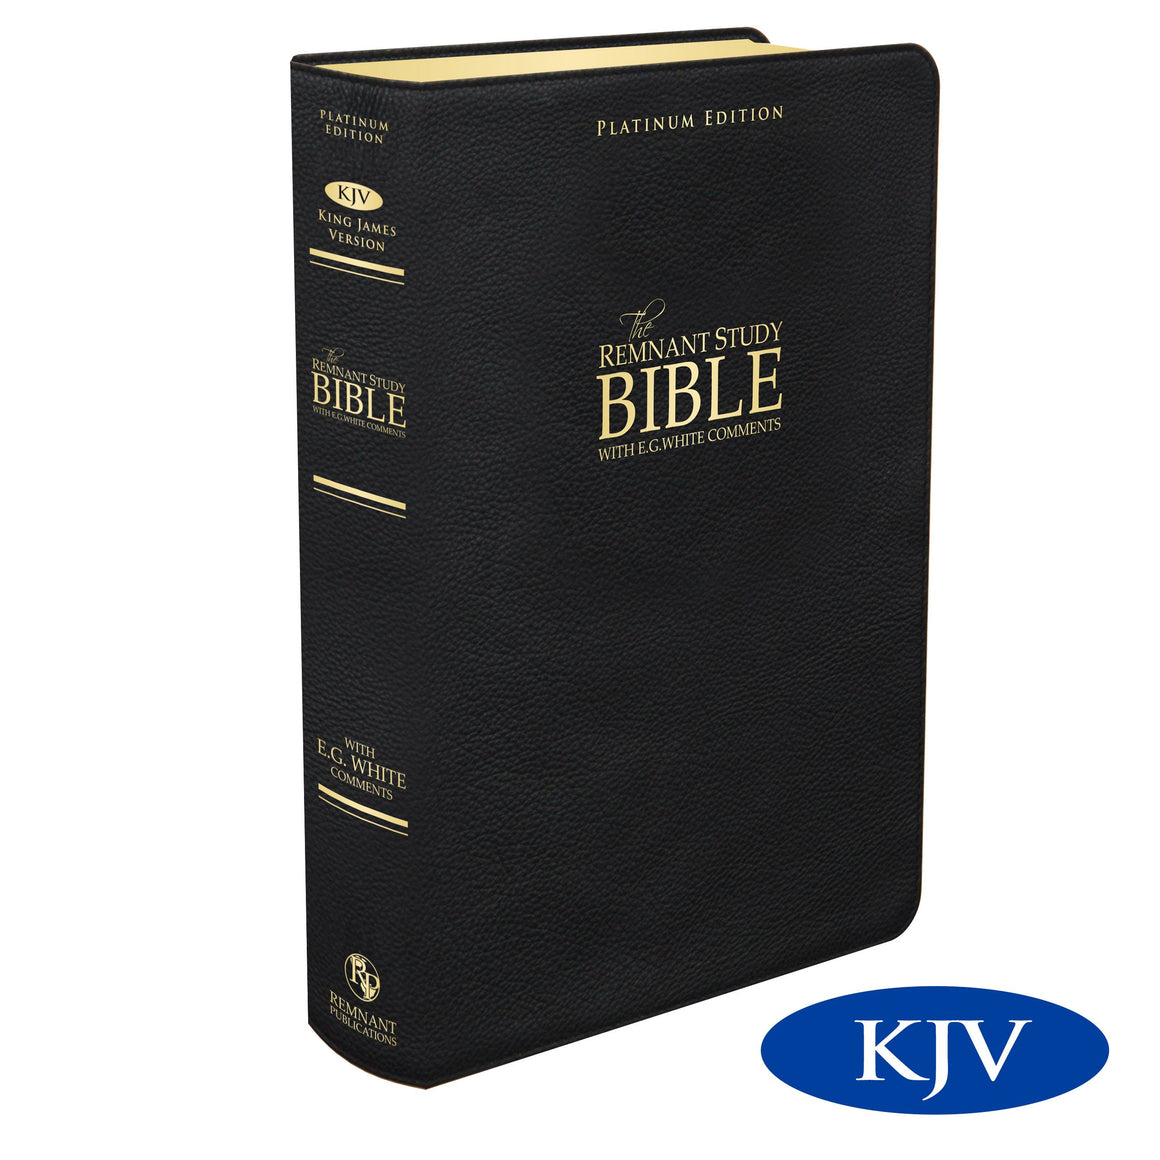 Platinum Remnant Study Bible KJV - Large Print (Genuine Top-grain Leather Black)